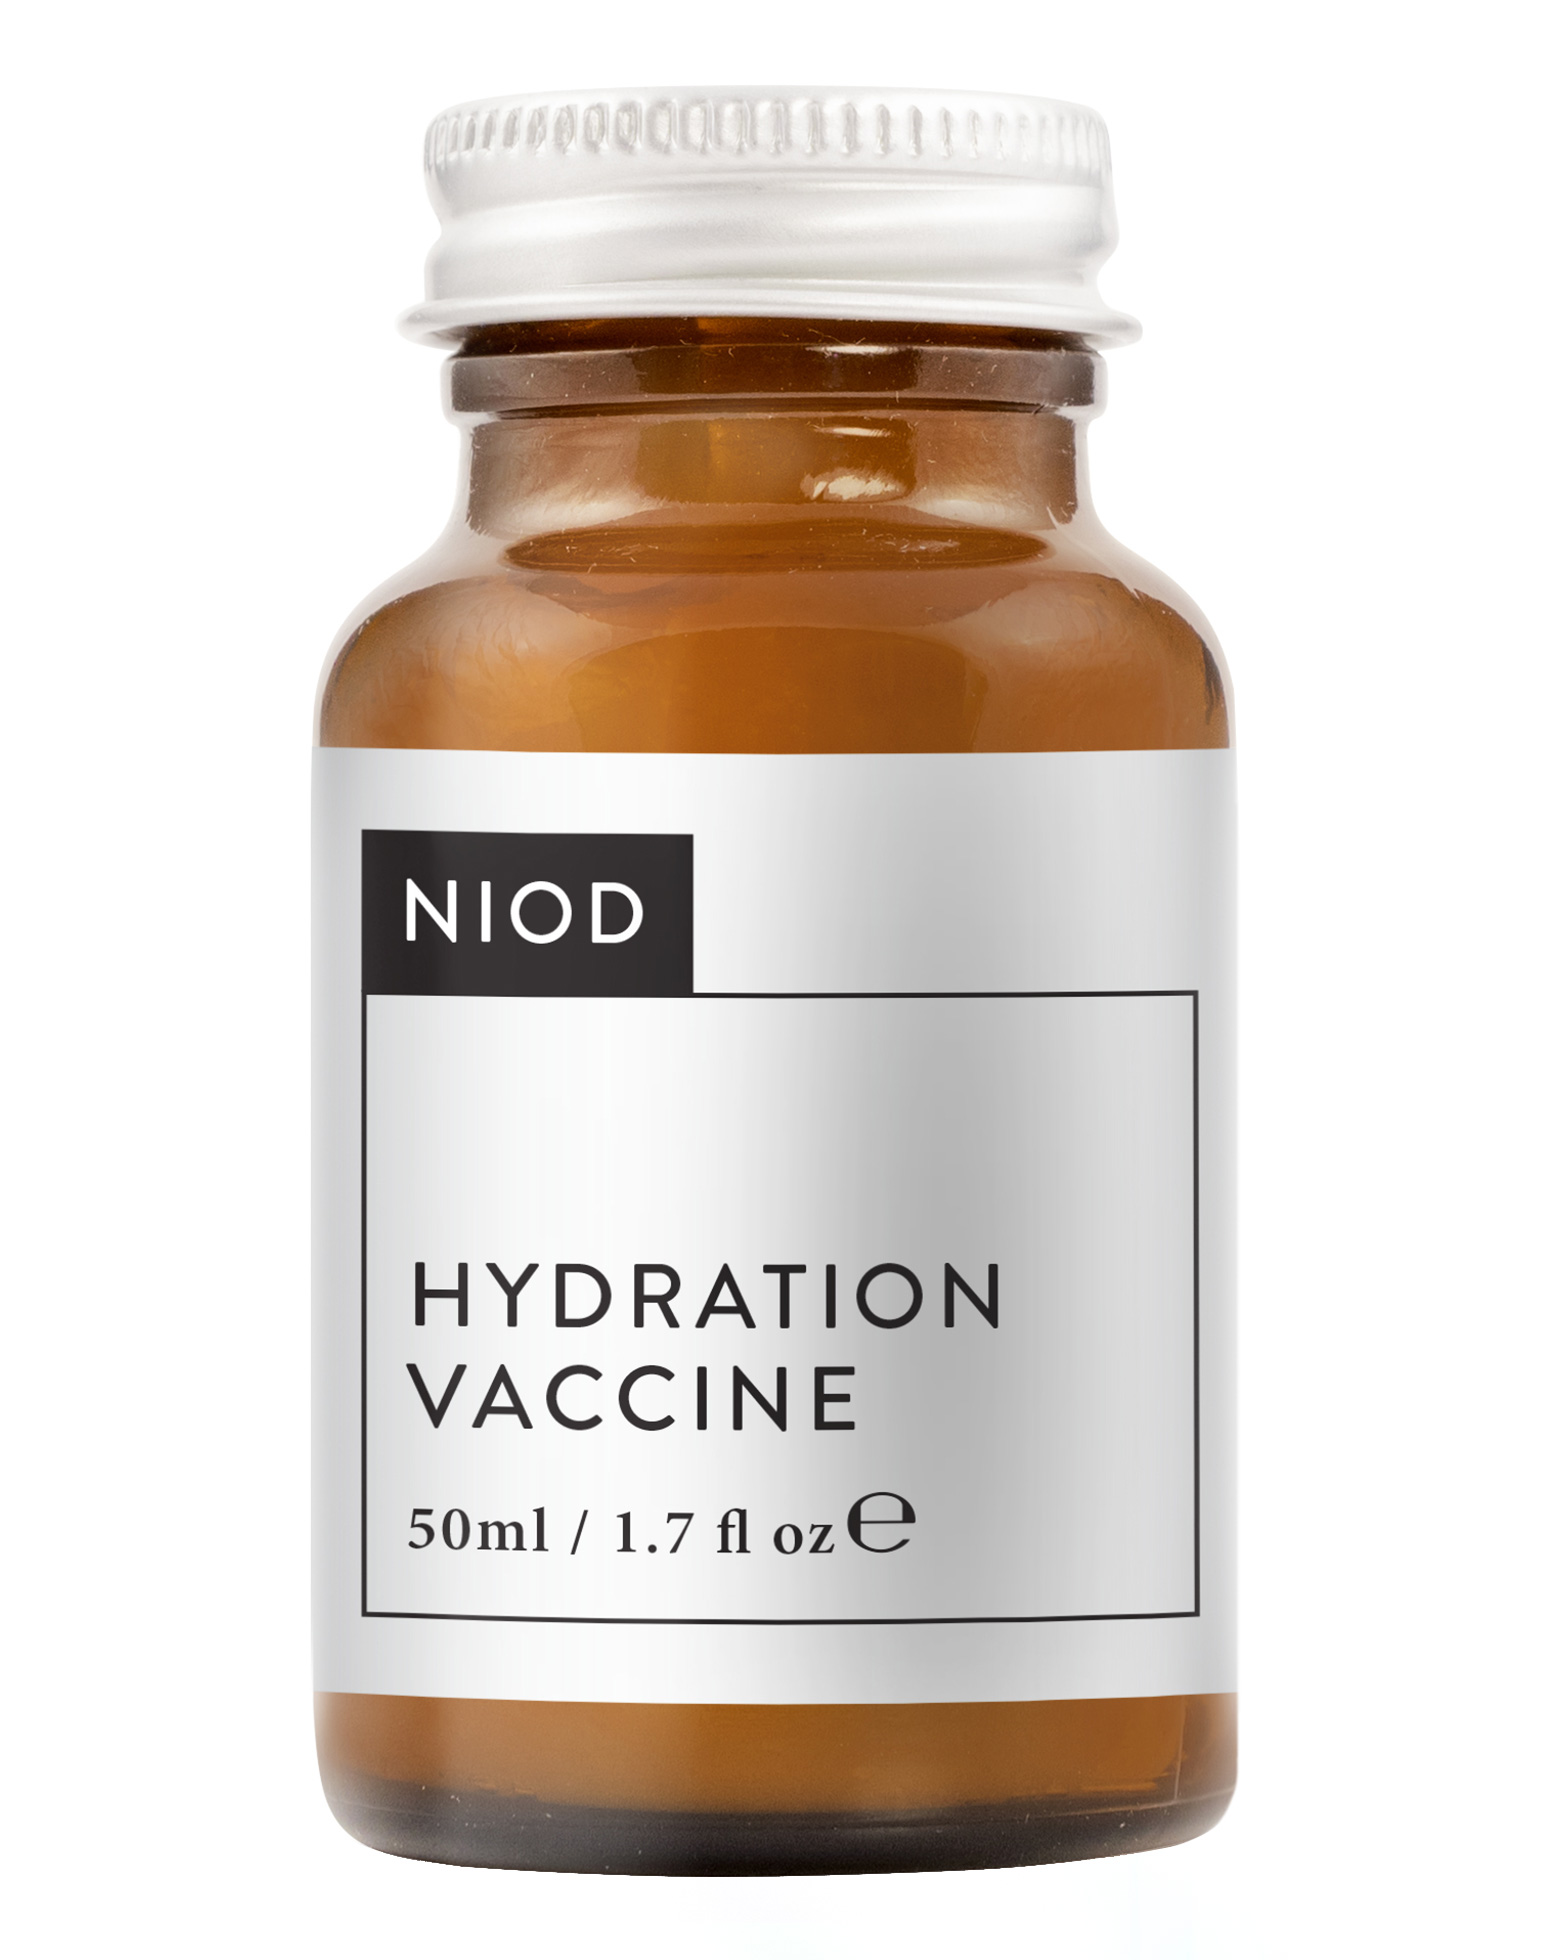  Hydration Vaccine